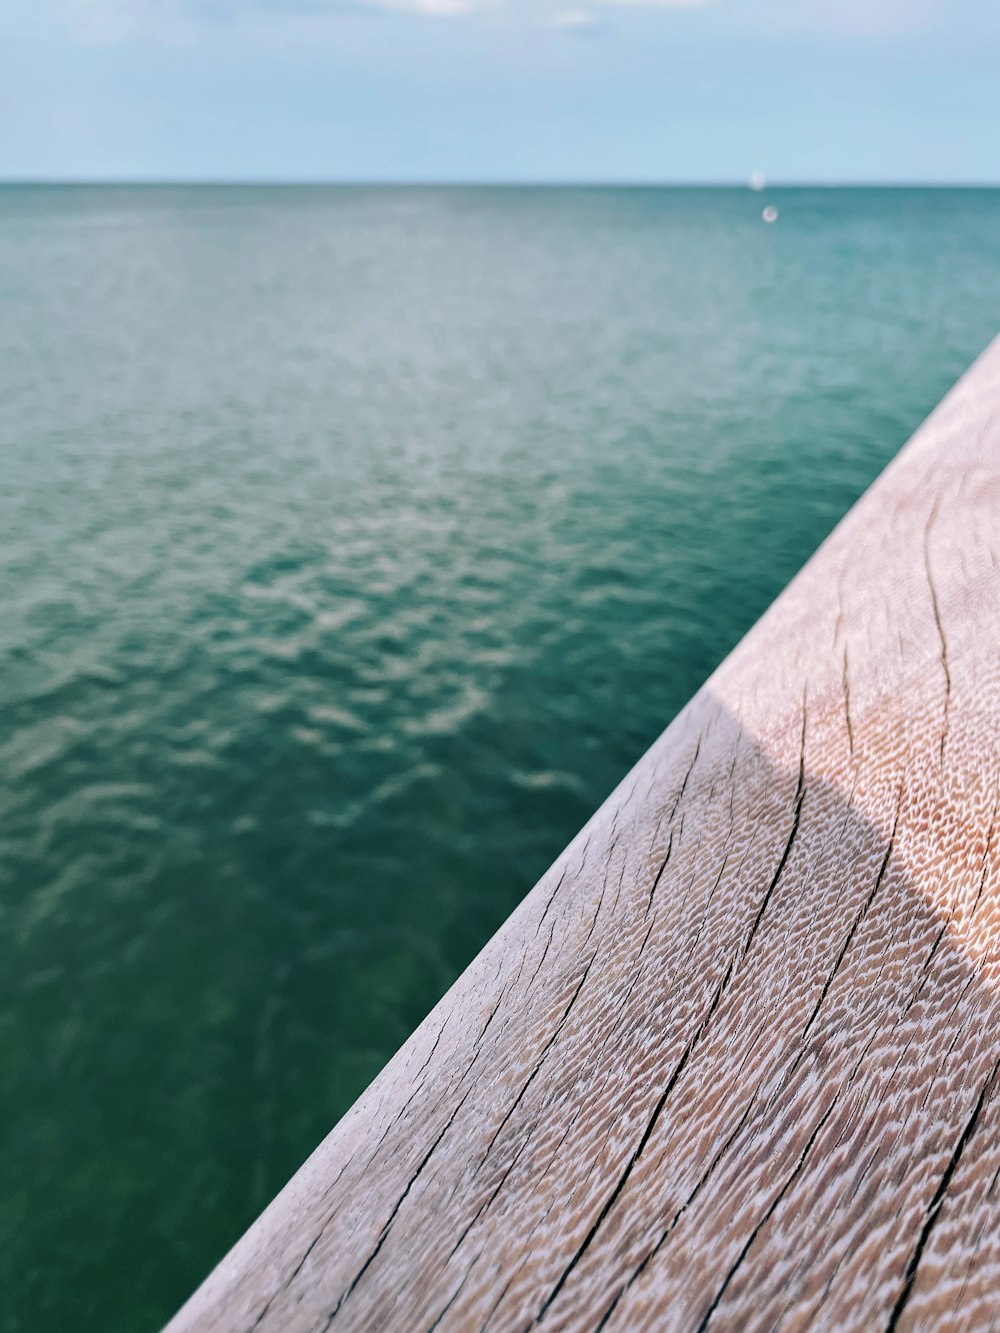 a wood railing overlooking the ocean